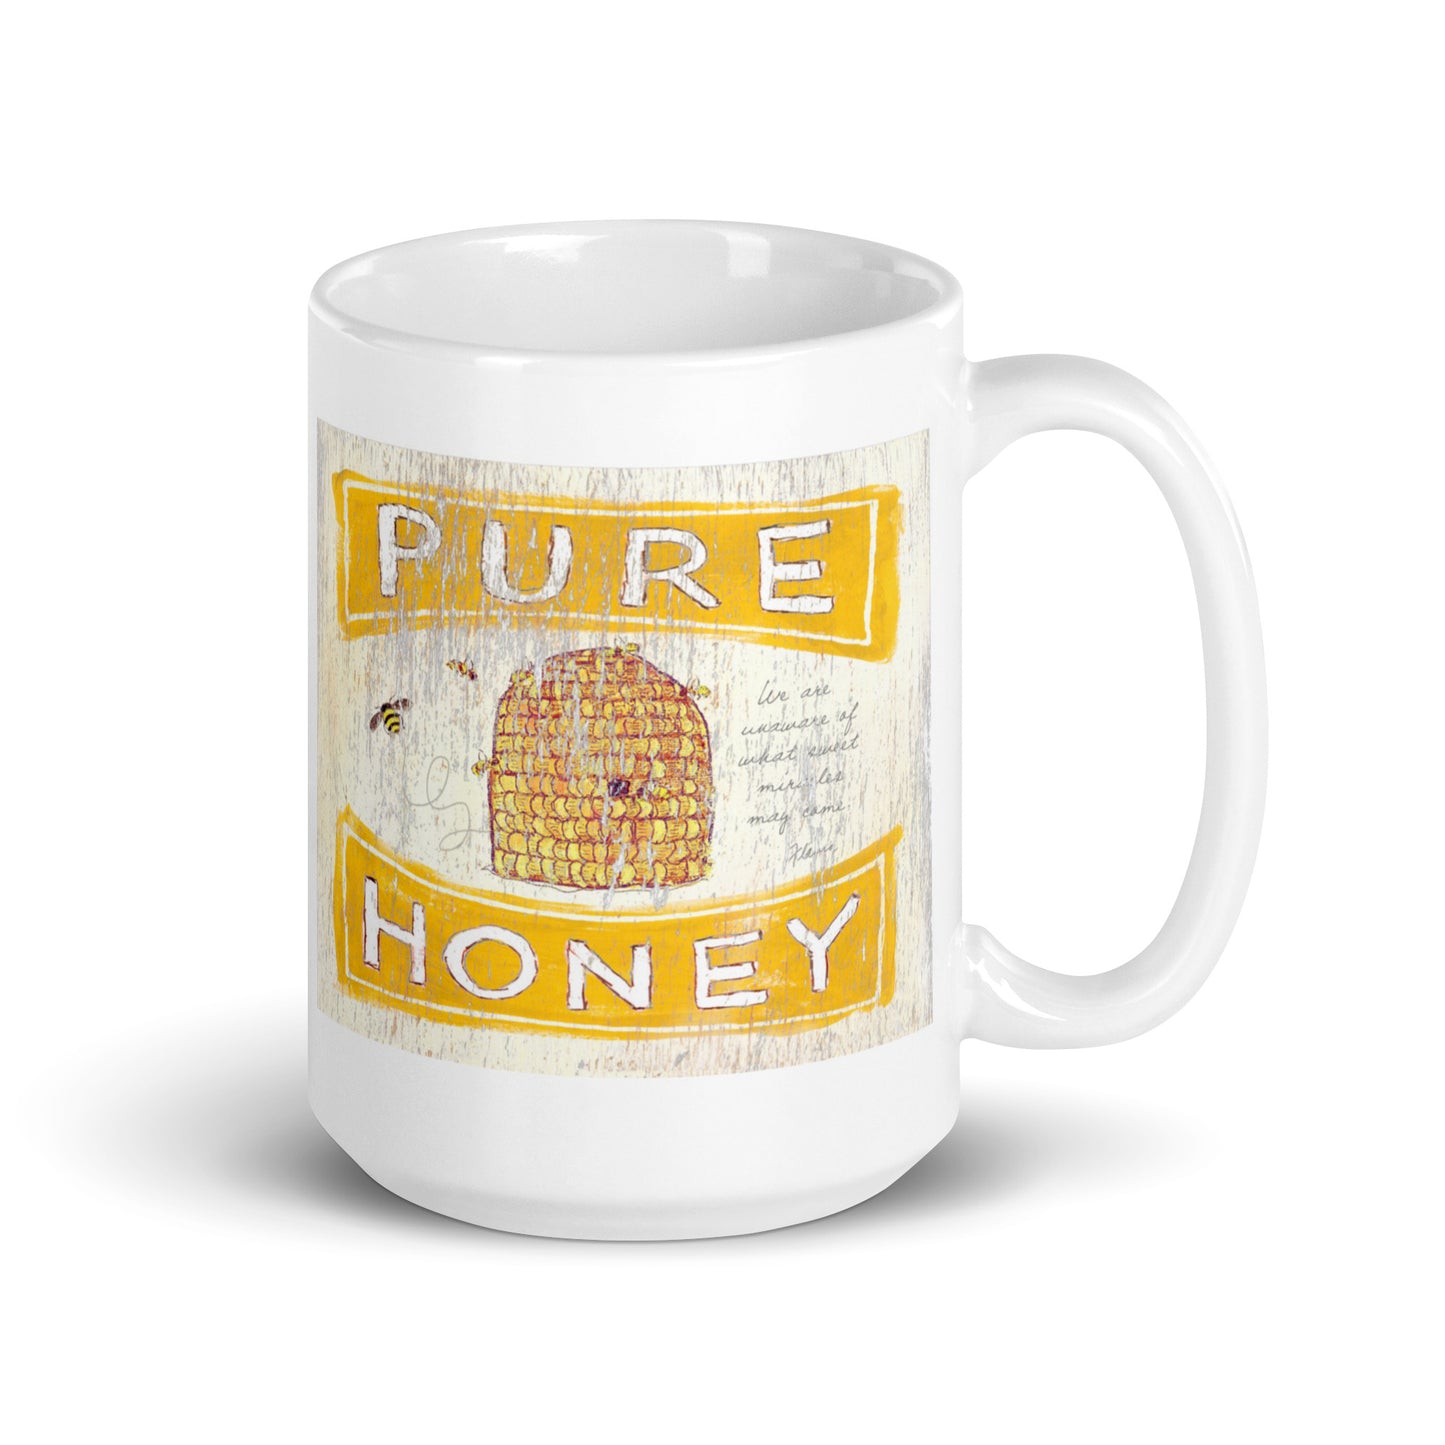 Flavia Vintage Honey Mug